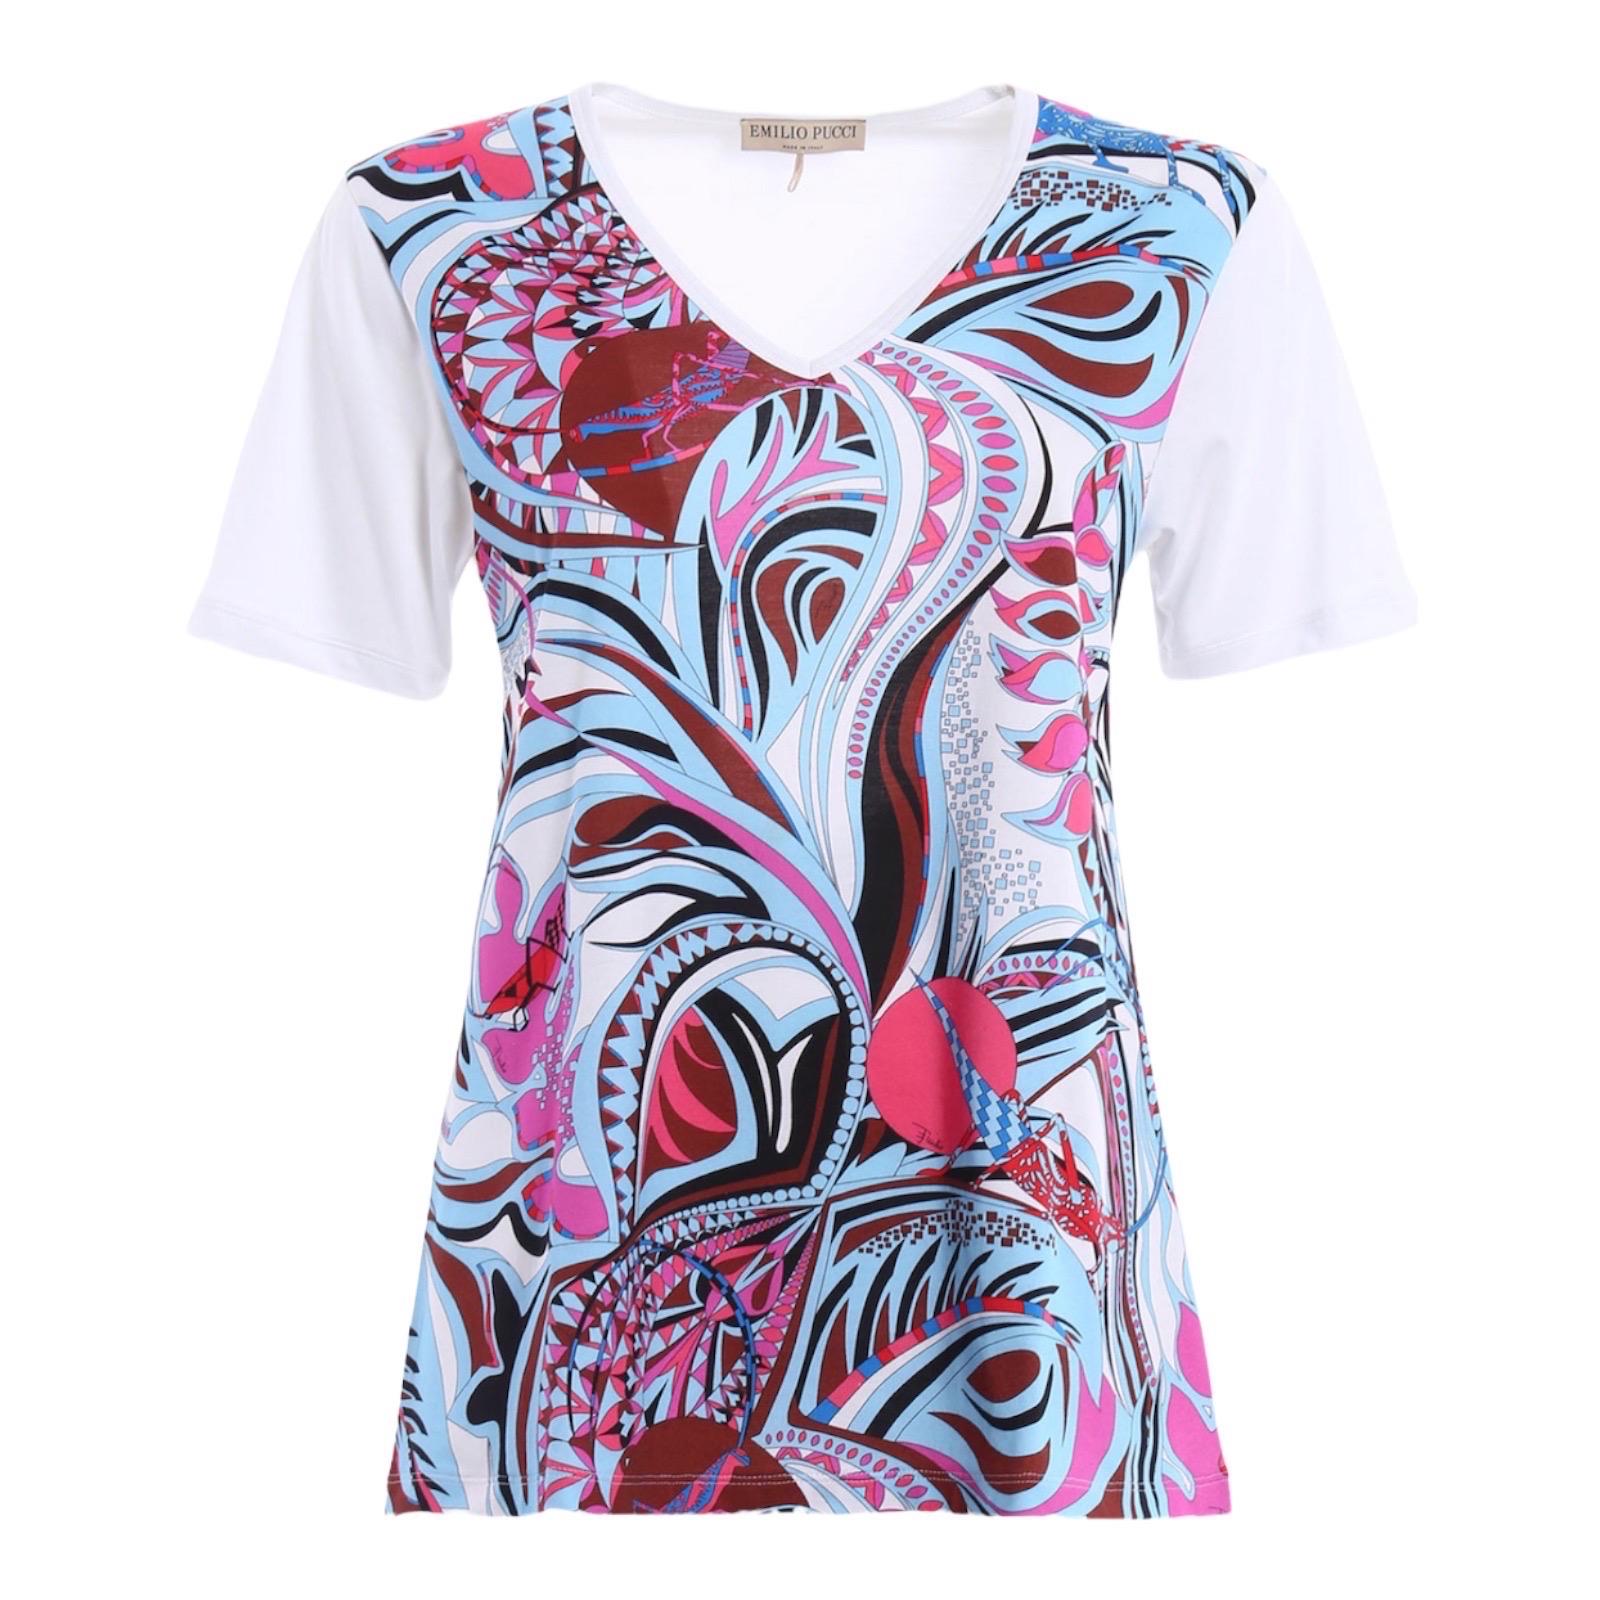 UNWORN Emilio Pucci Tropical Floral Animal Signature Print T-Shirt M For Sale